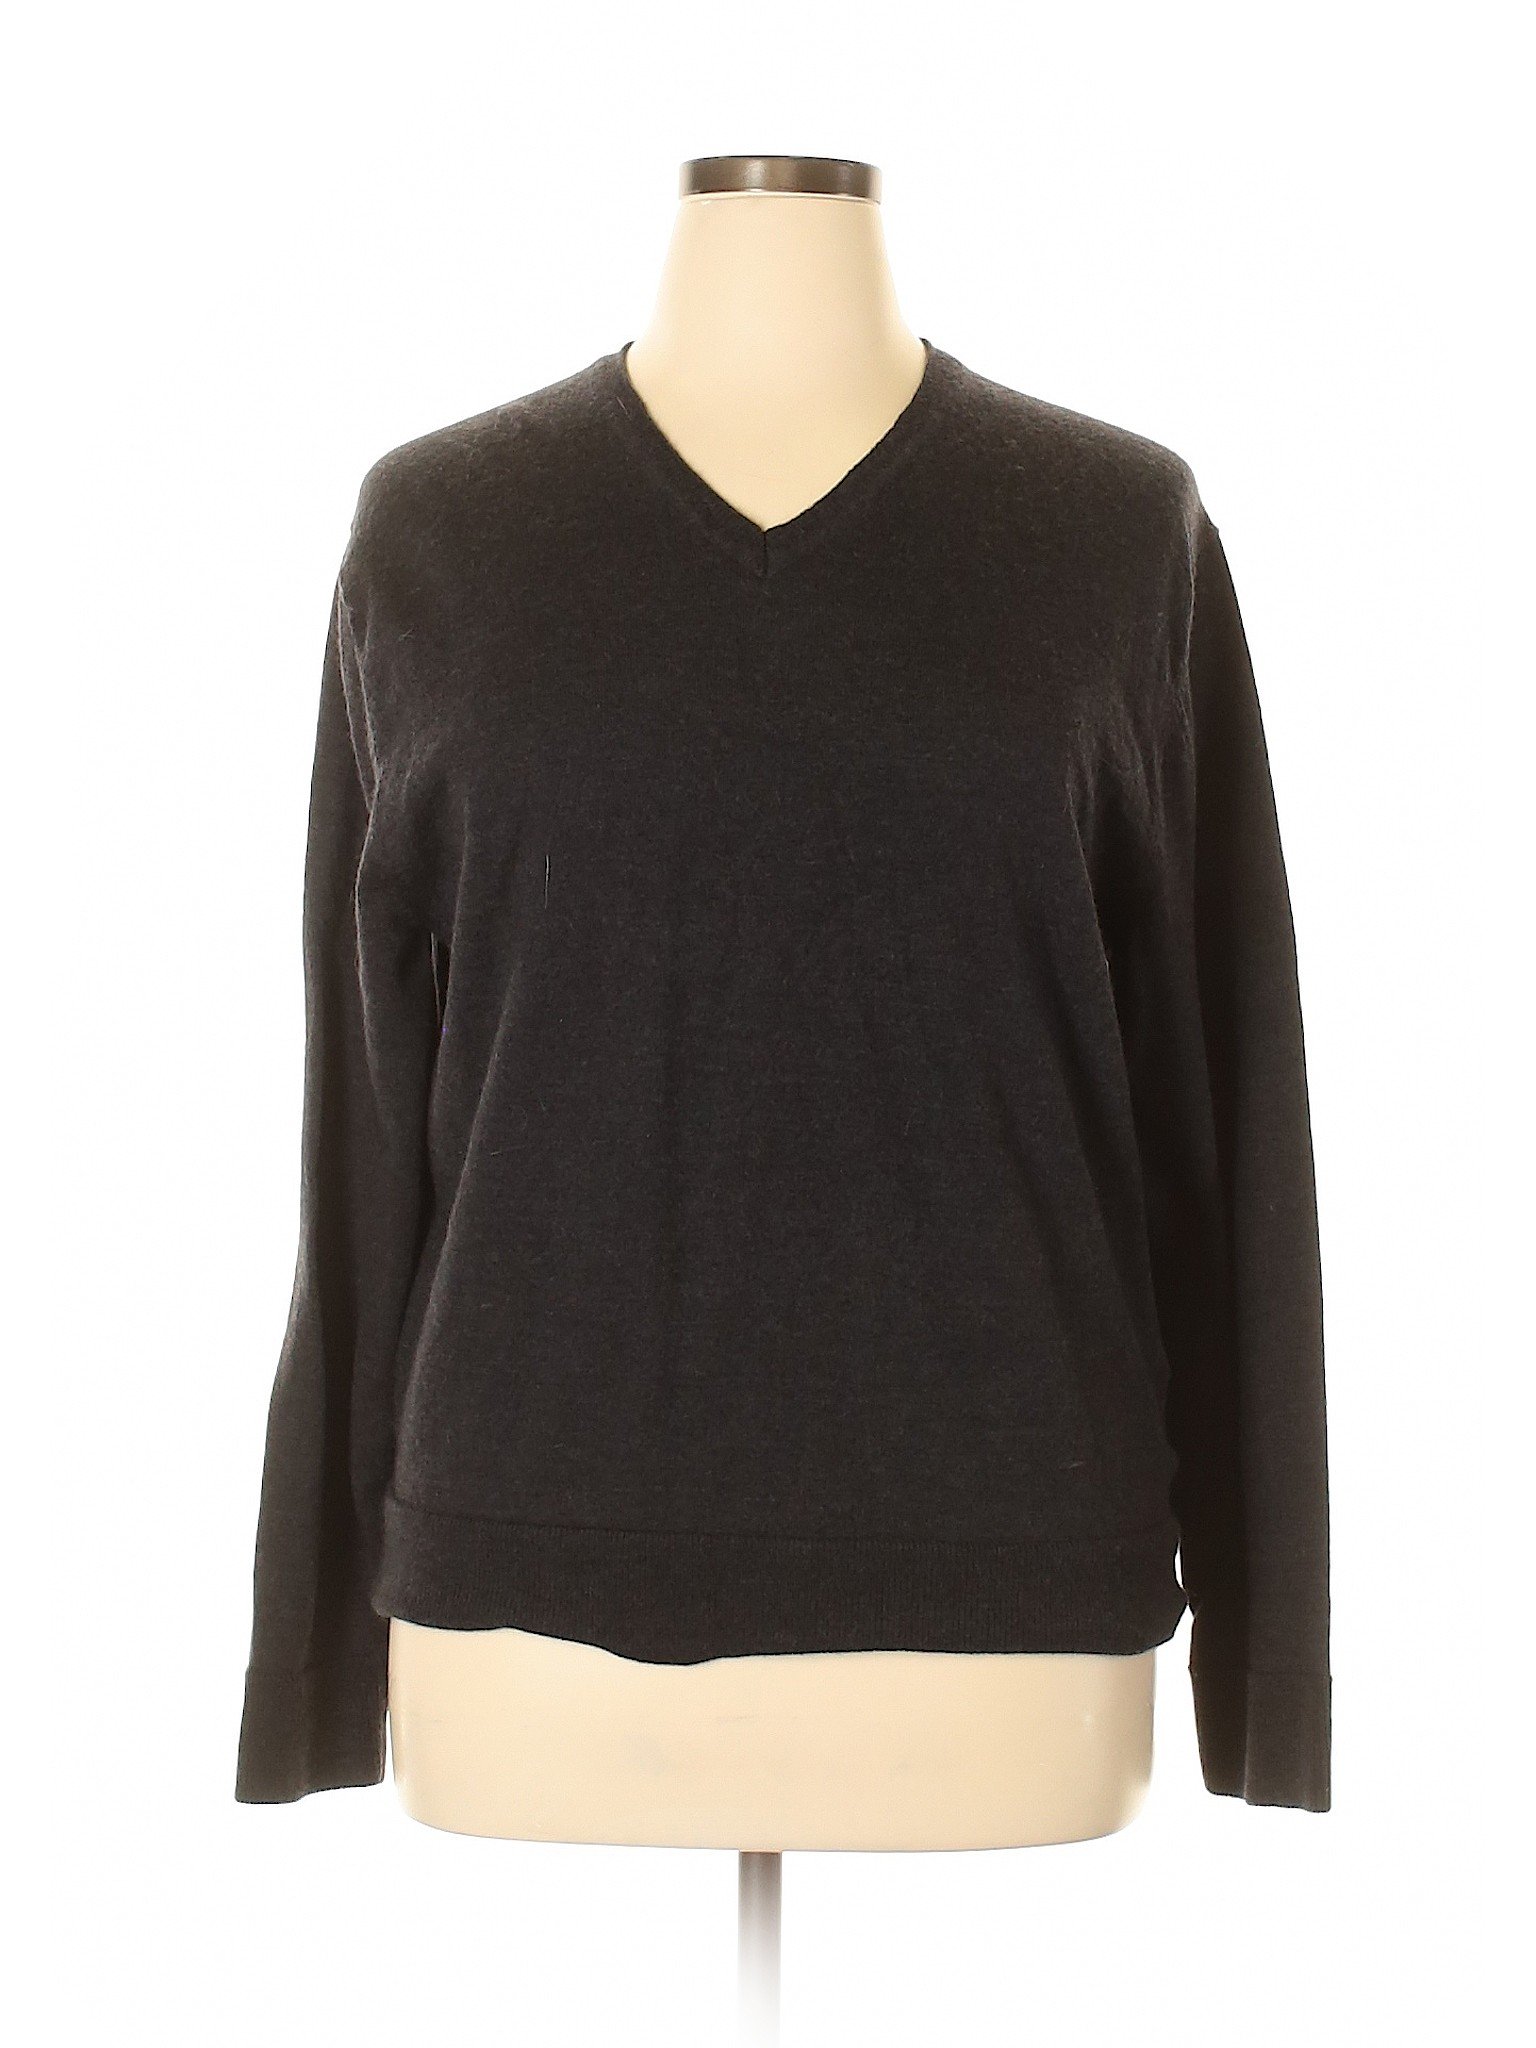 Gap 100% Merino Wool Gray Wool Pullover Sweater Size XL - 87% off | thredUP